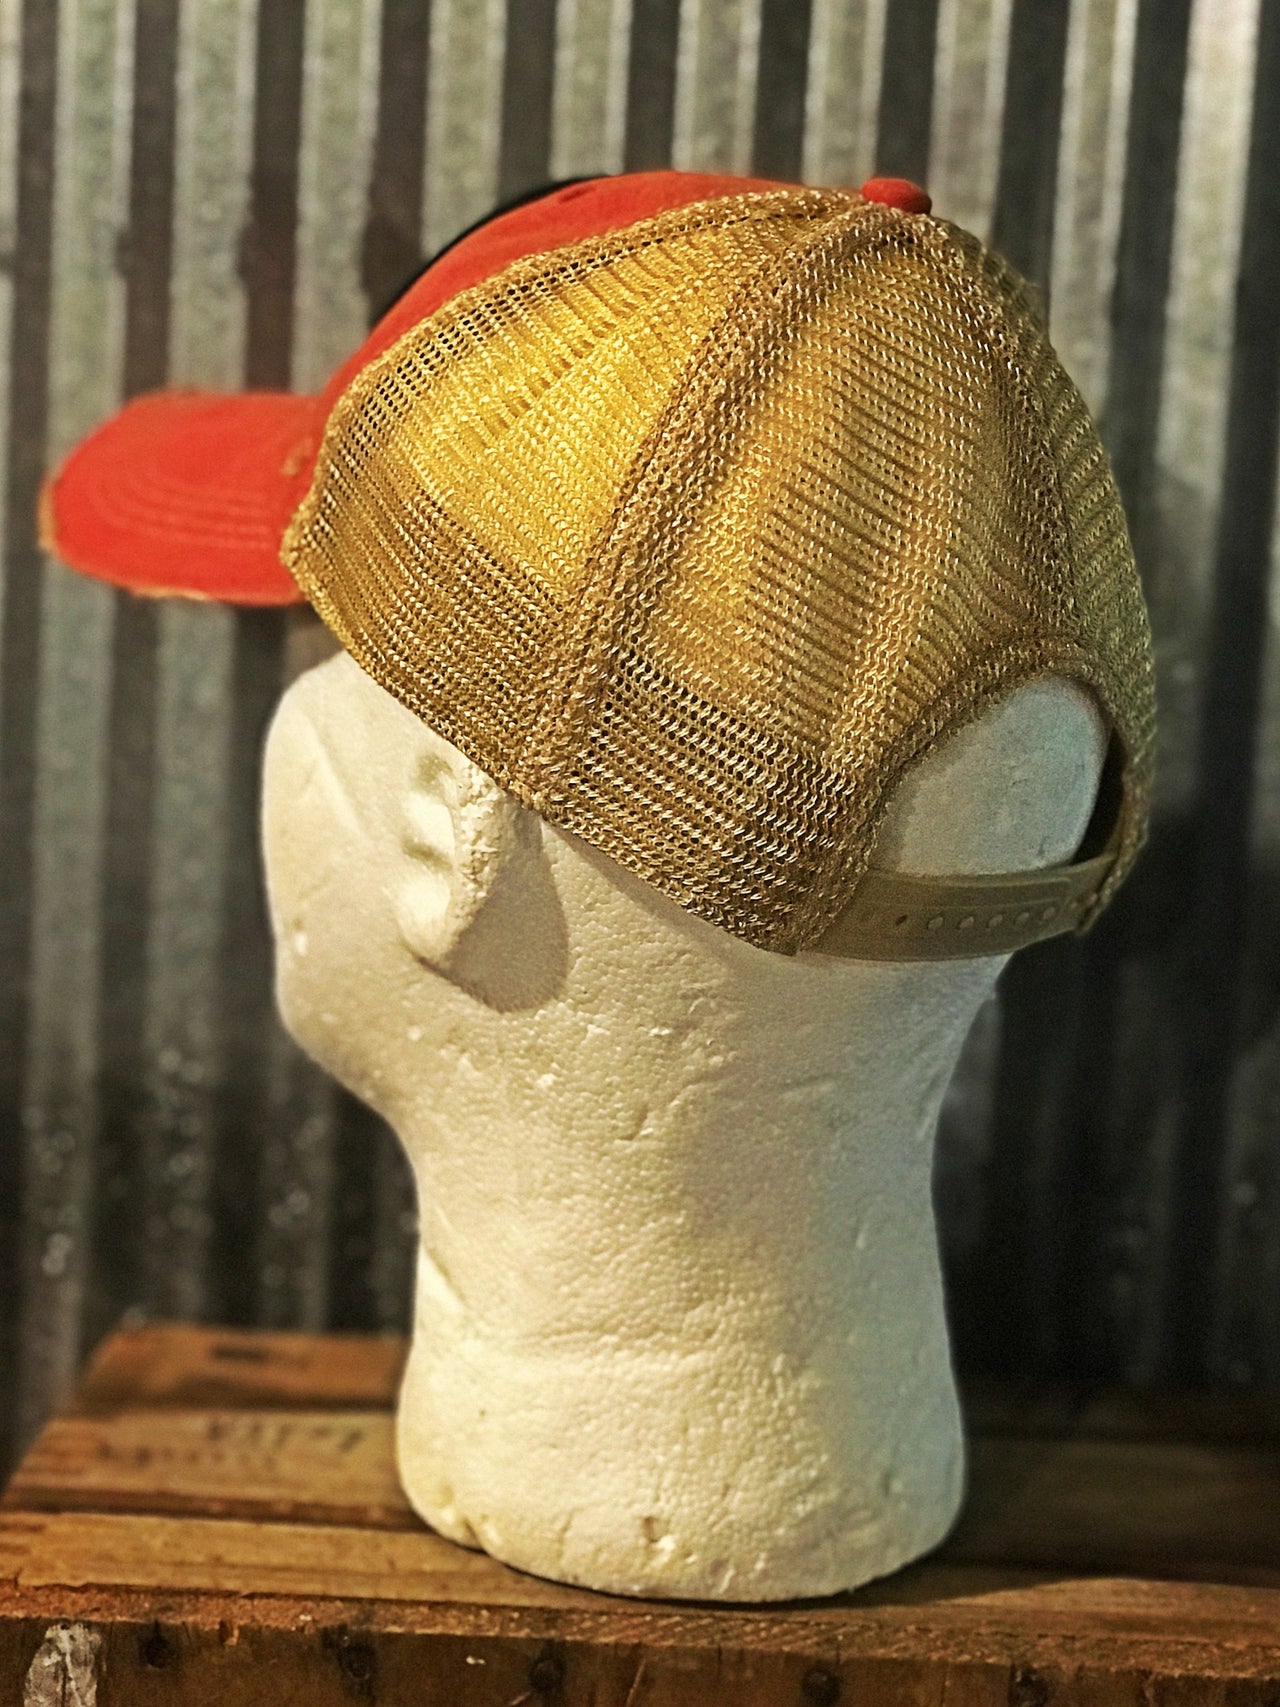 Texaco Vintage Star Logo Hat- Distressed Red Snapback